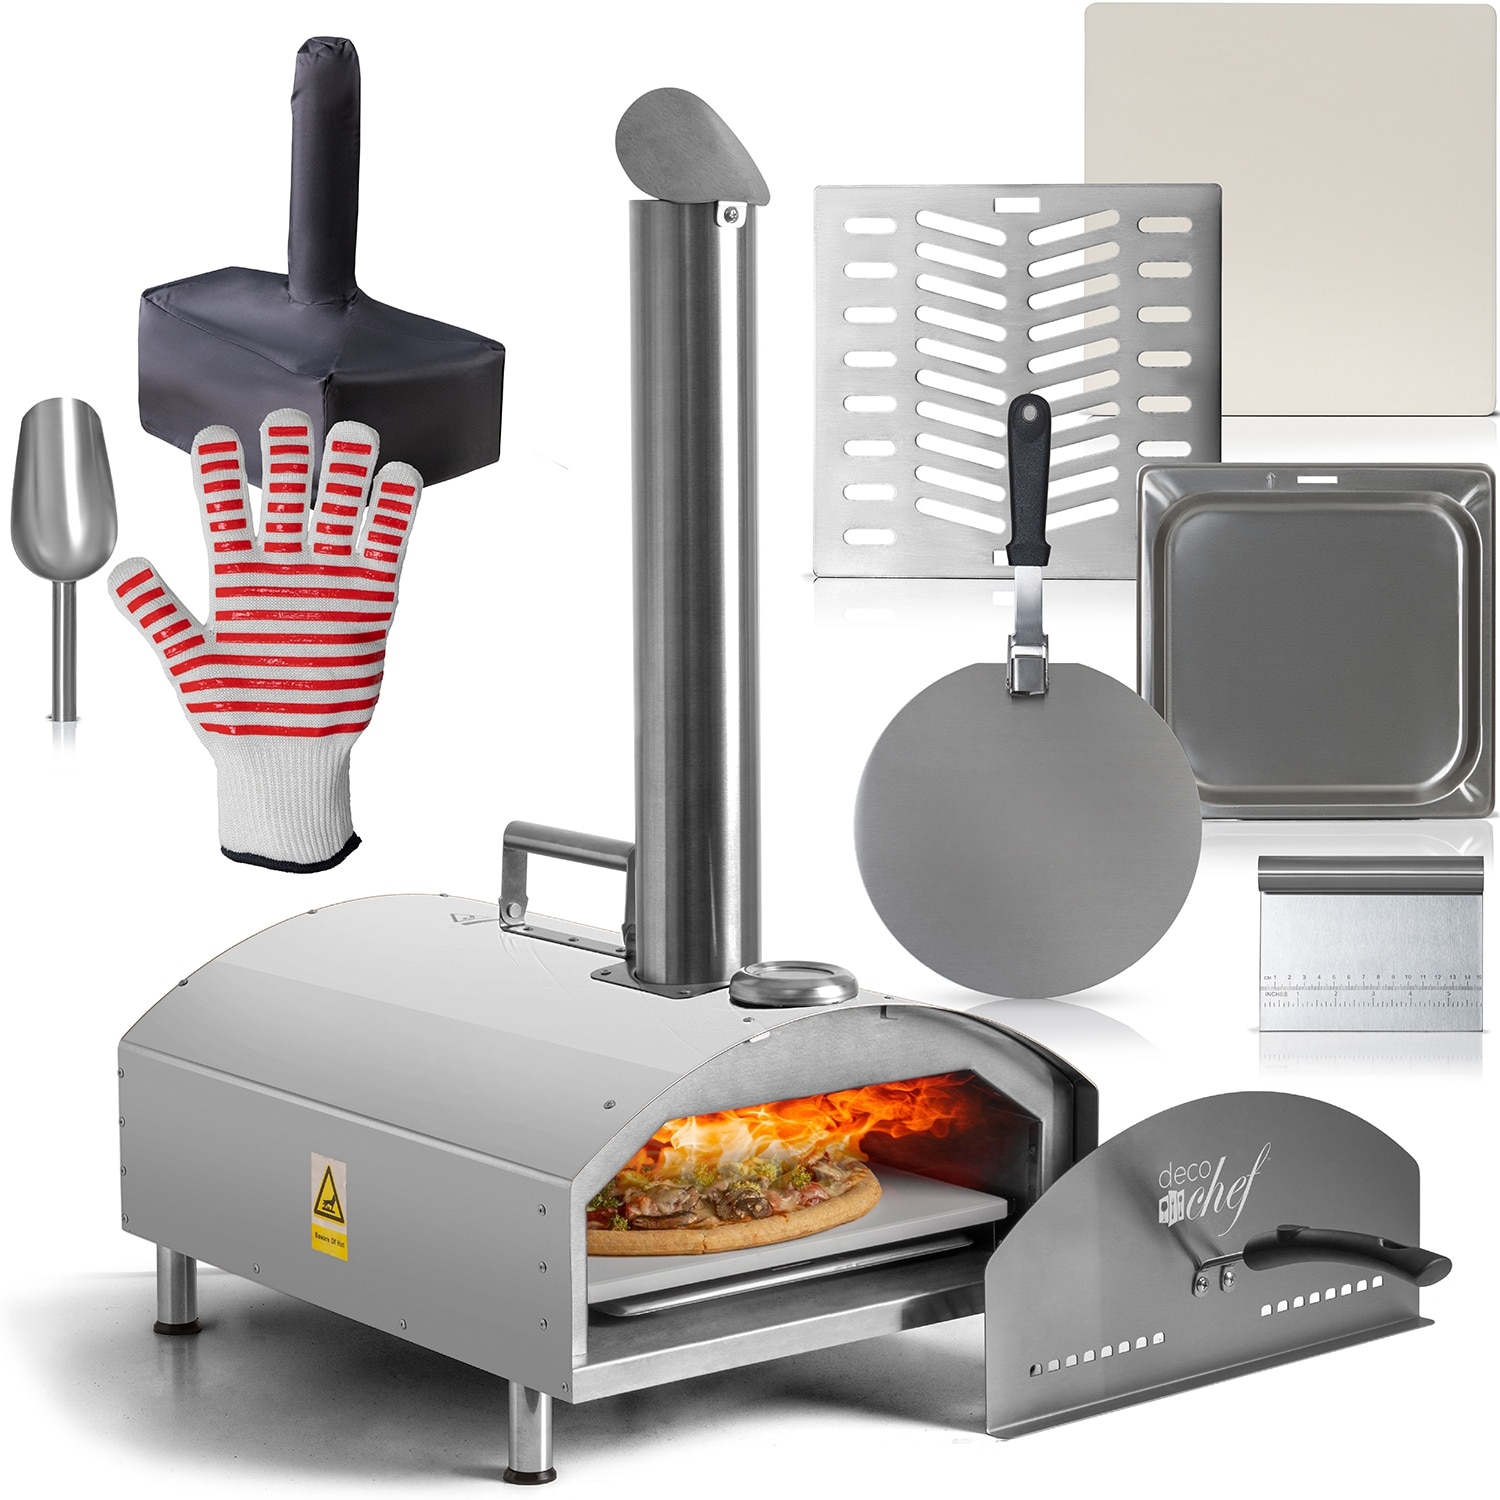 Hamilton Beach Enclosed Pizza Oven Maker, Model# 31700 kitchen appliances  NEW!!